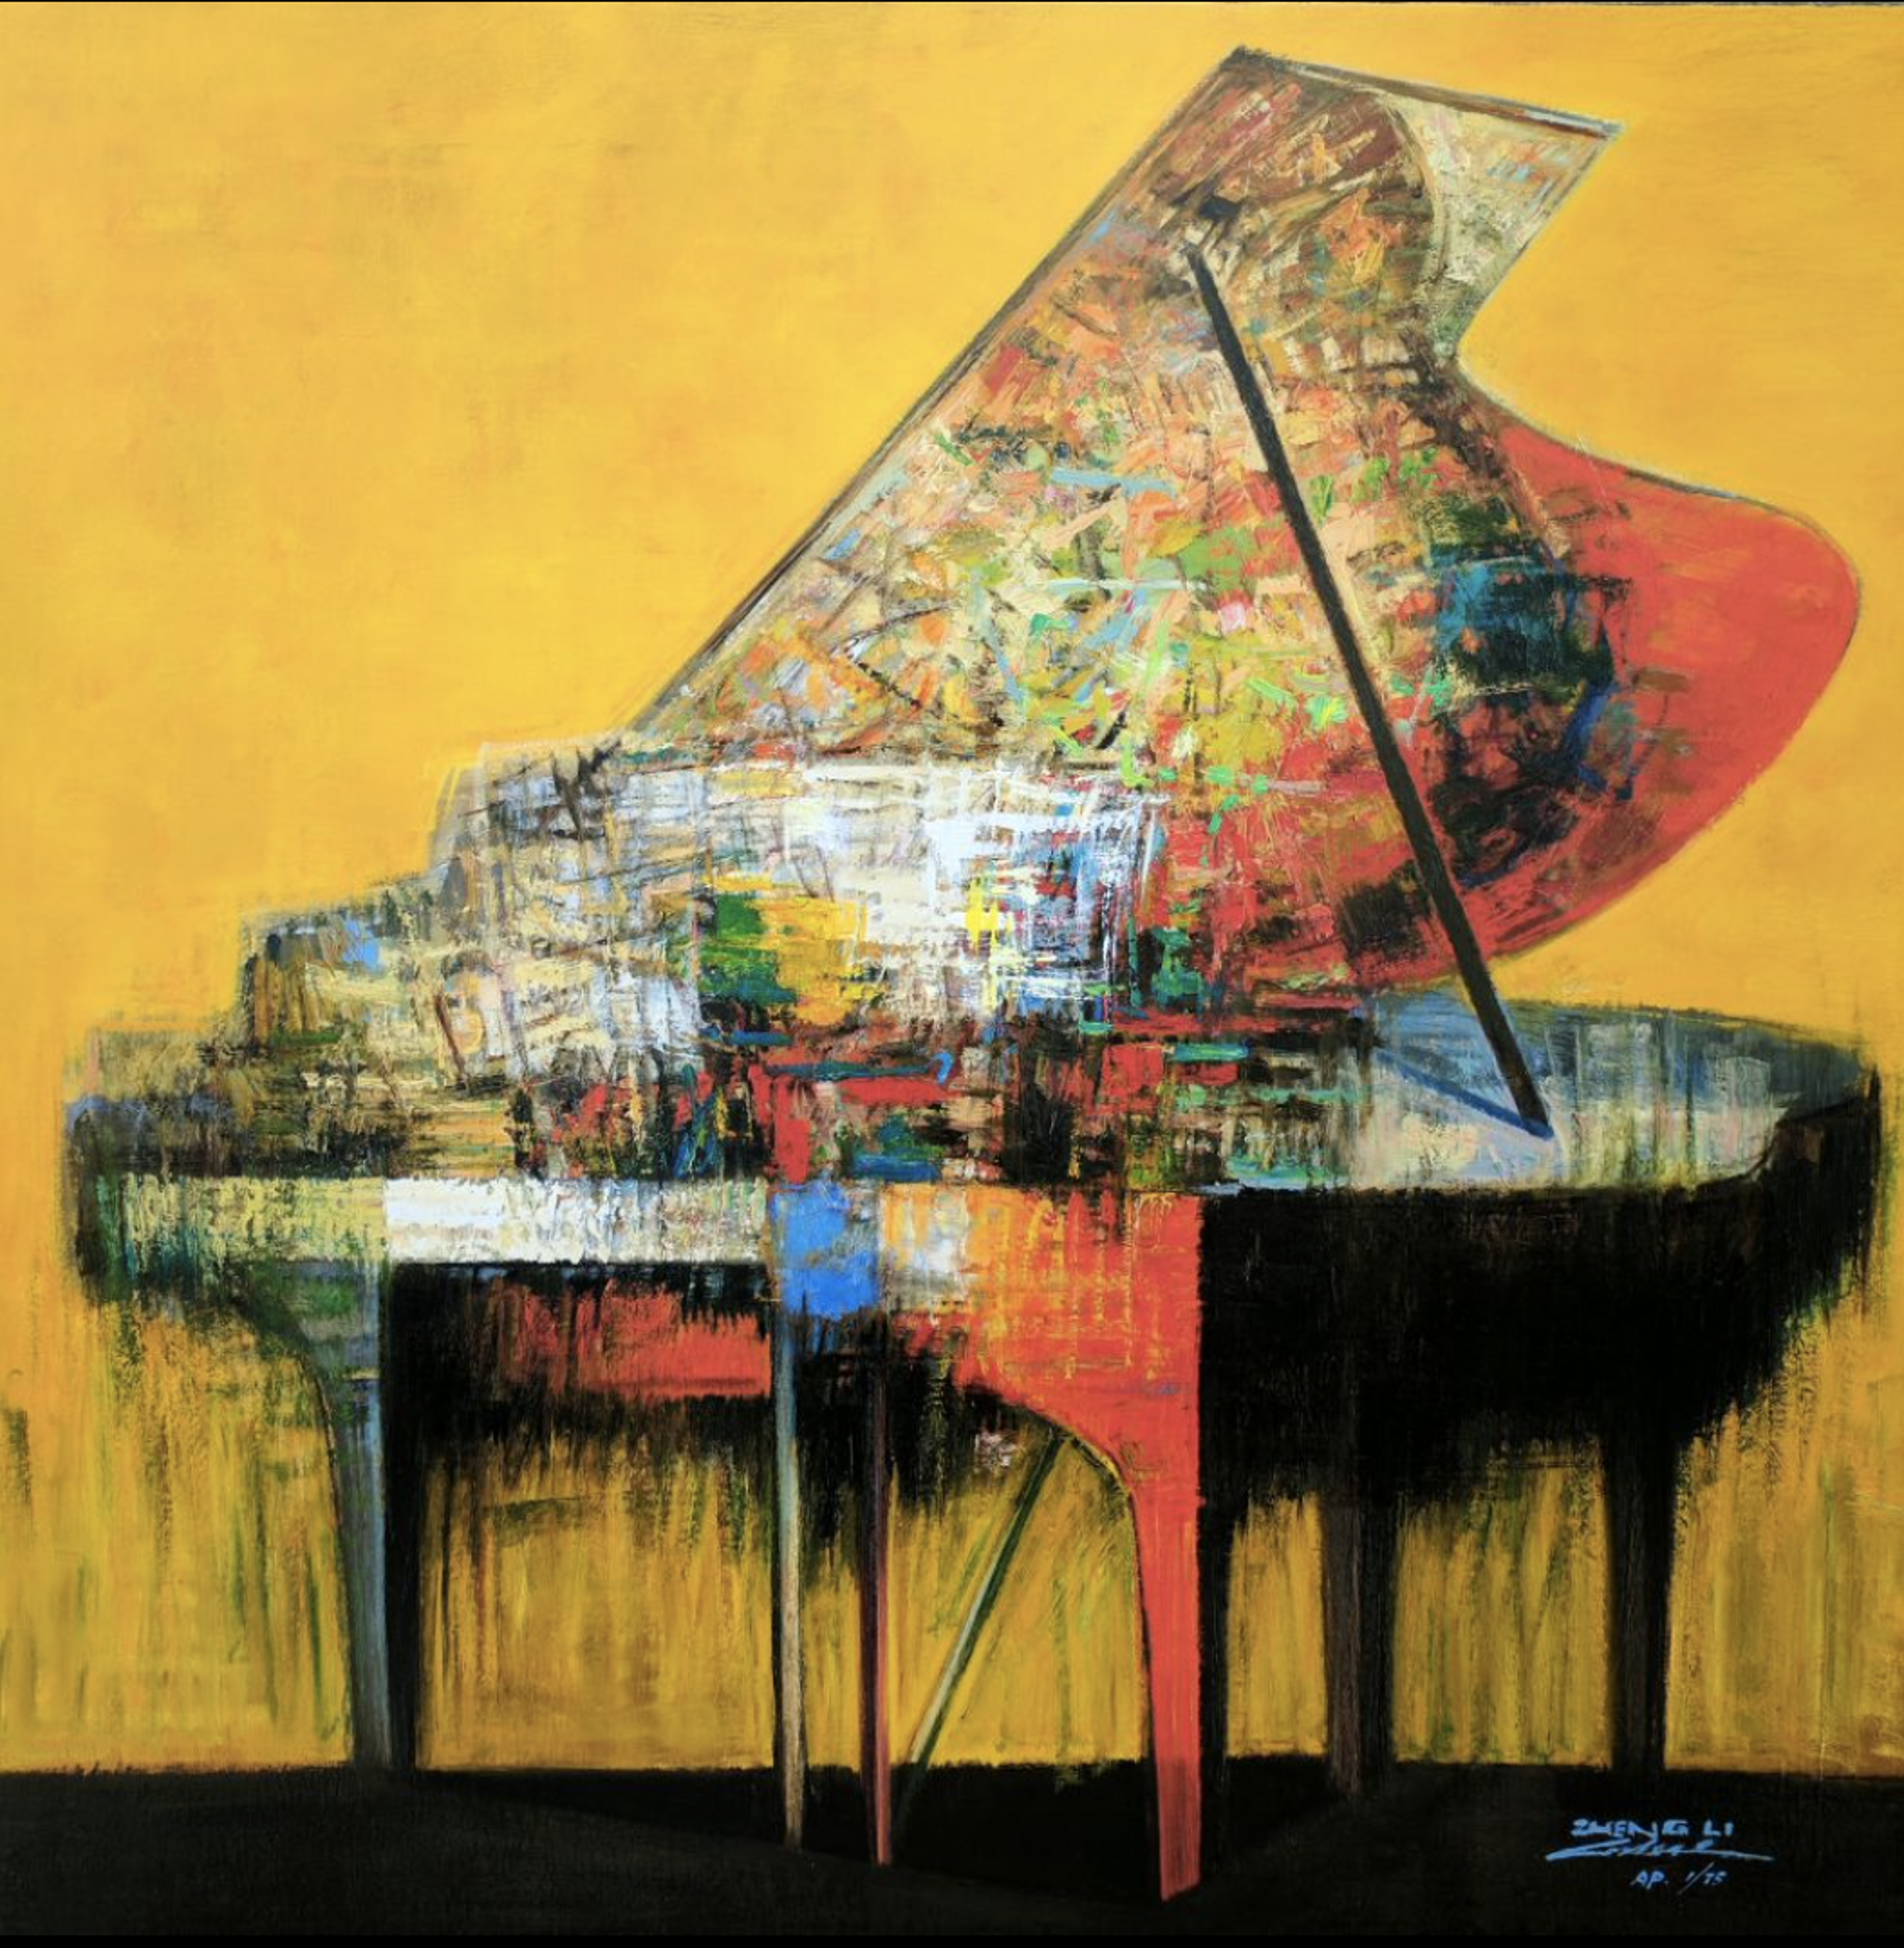 Piano Yellow by ZHENG LI